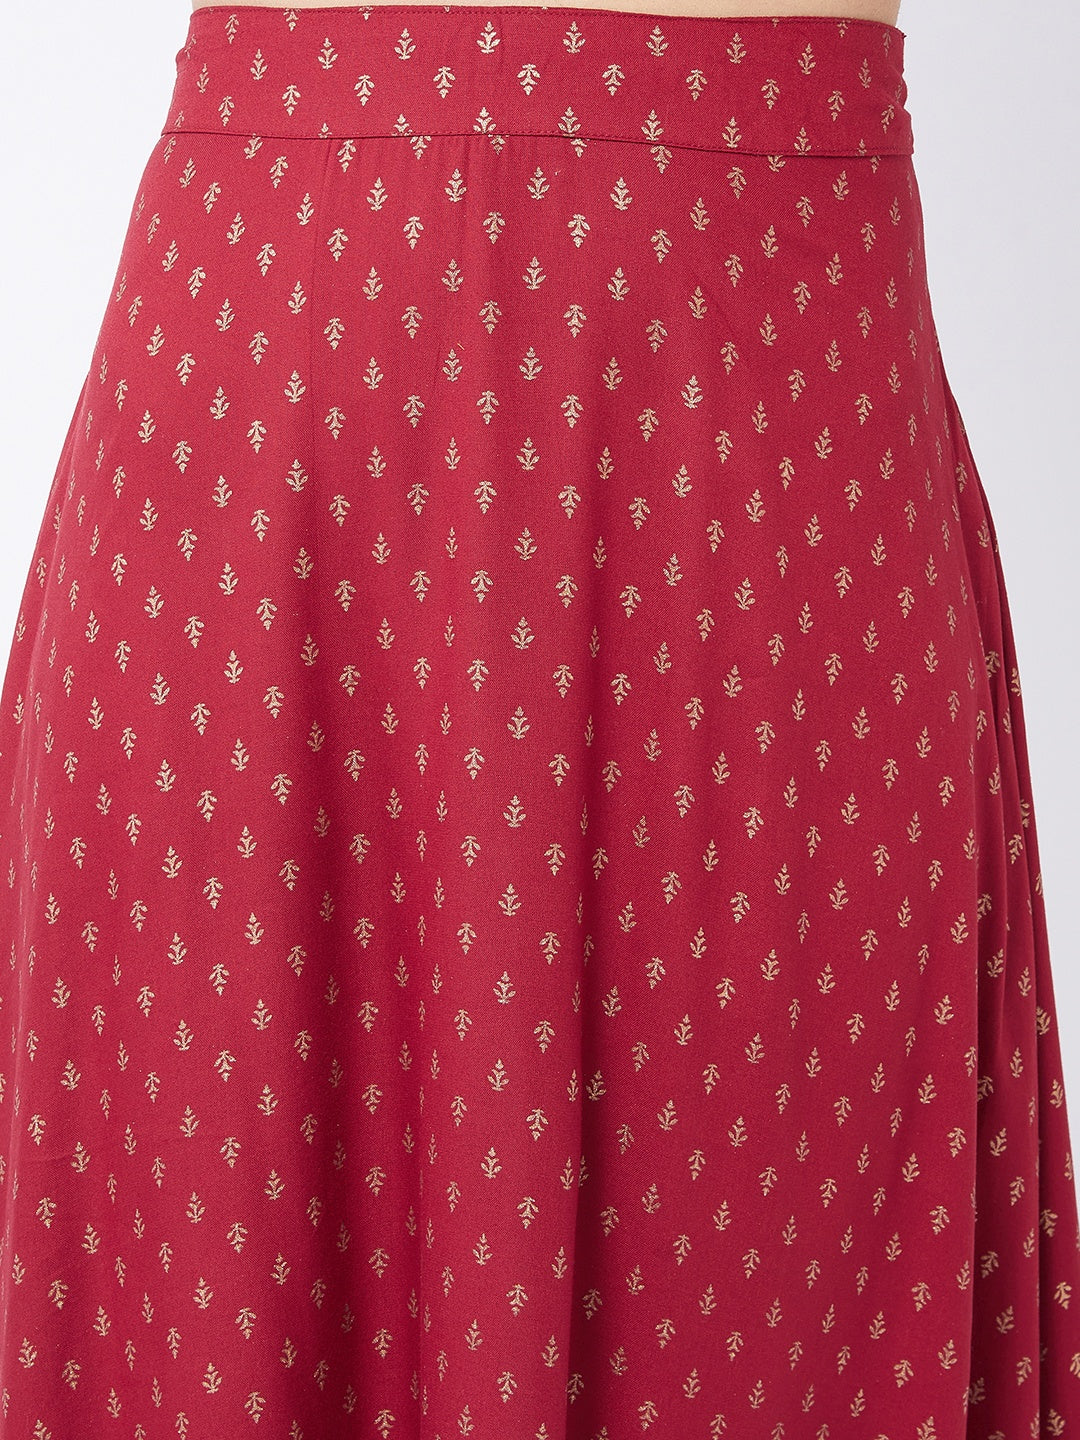 Carmine Pink Gold Print Long Skirt